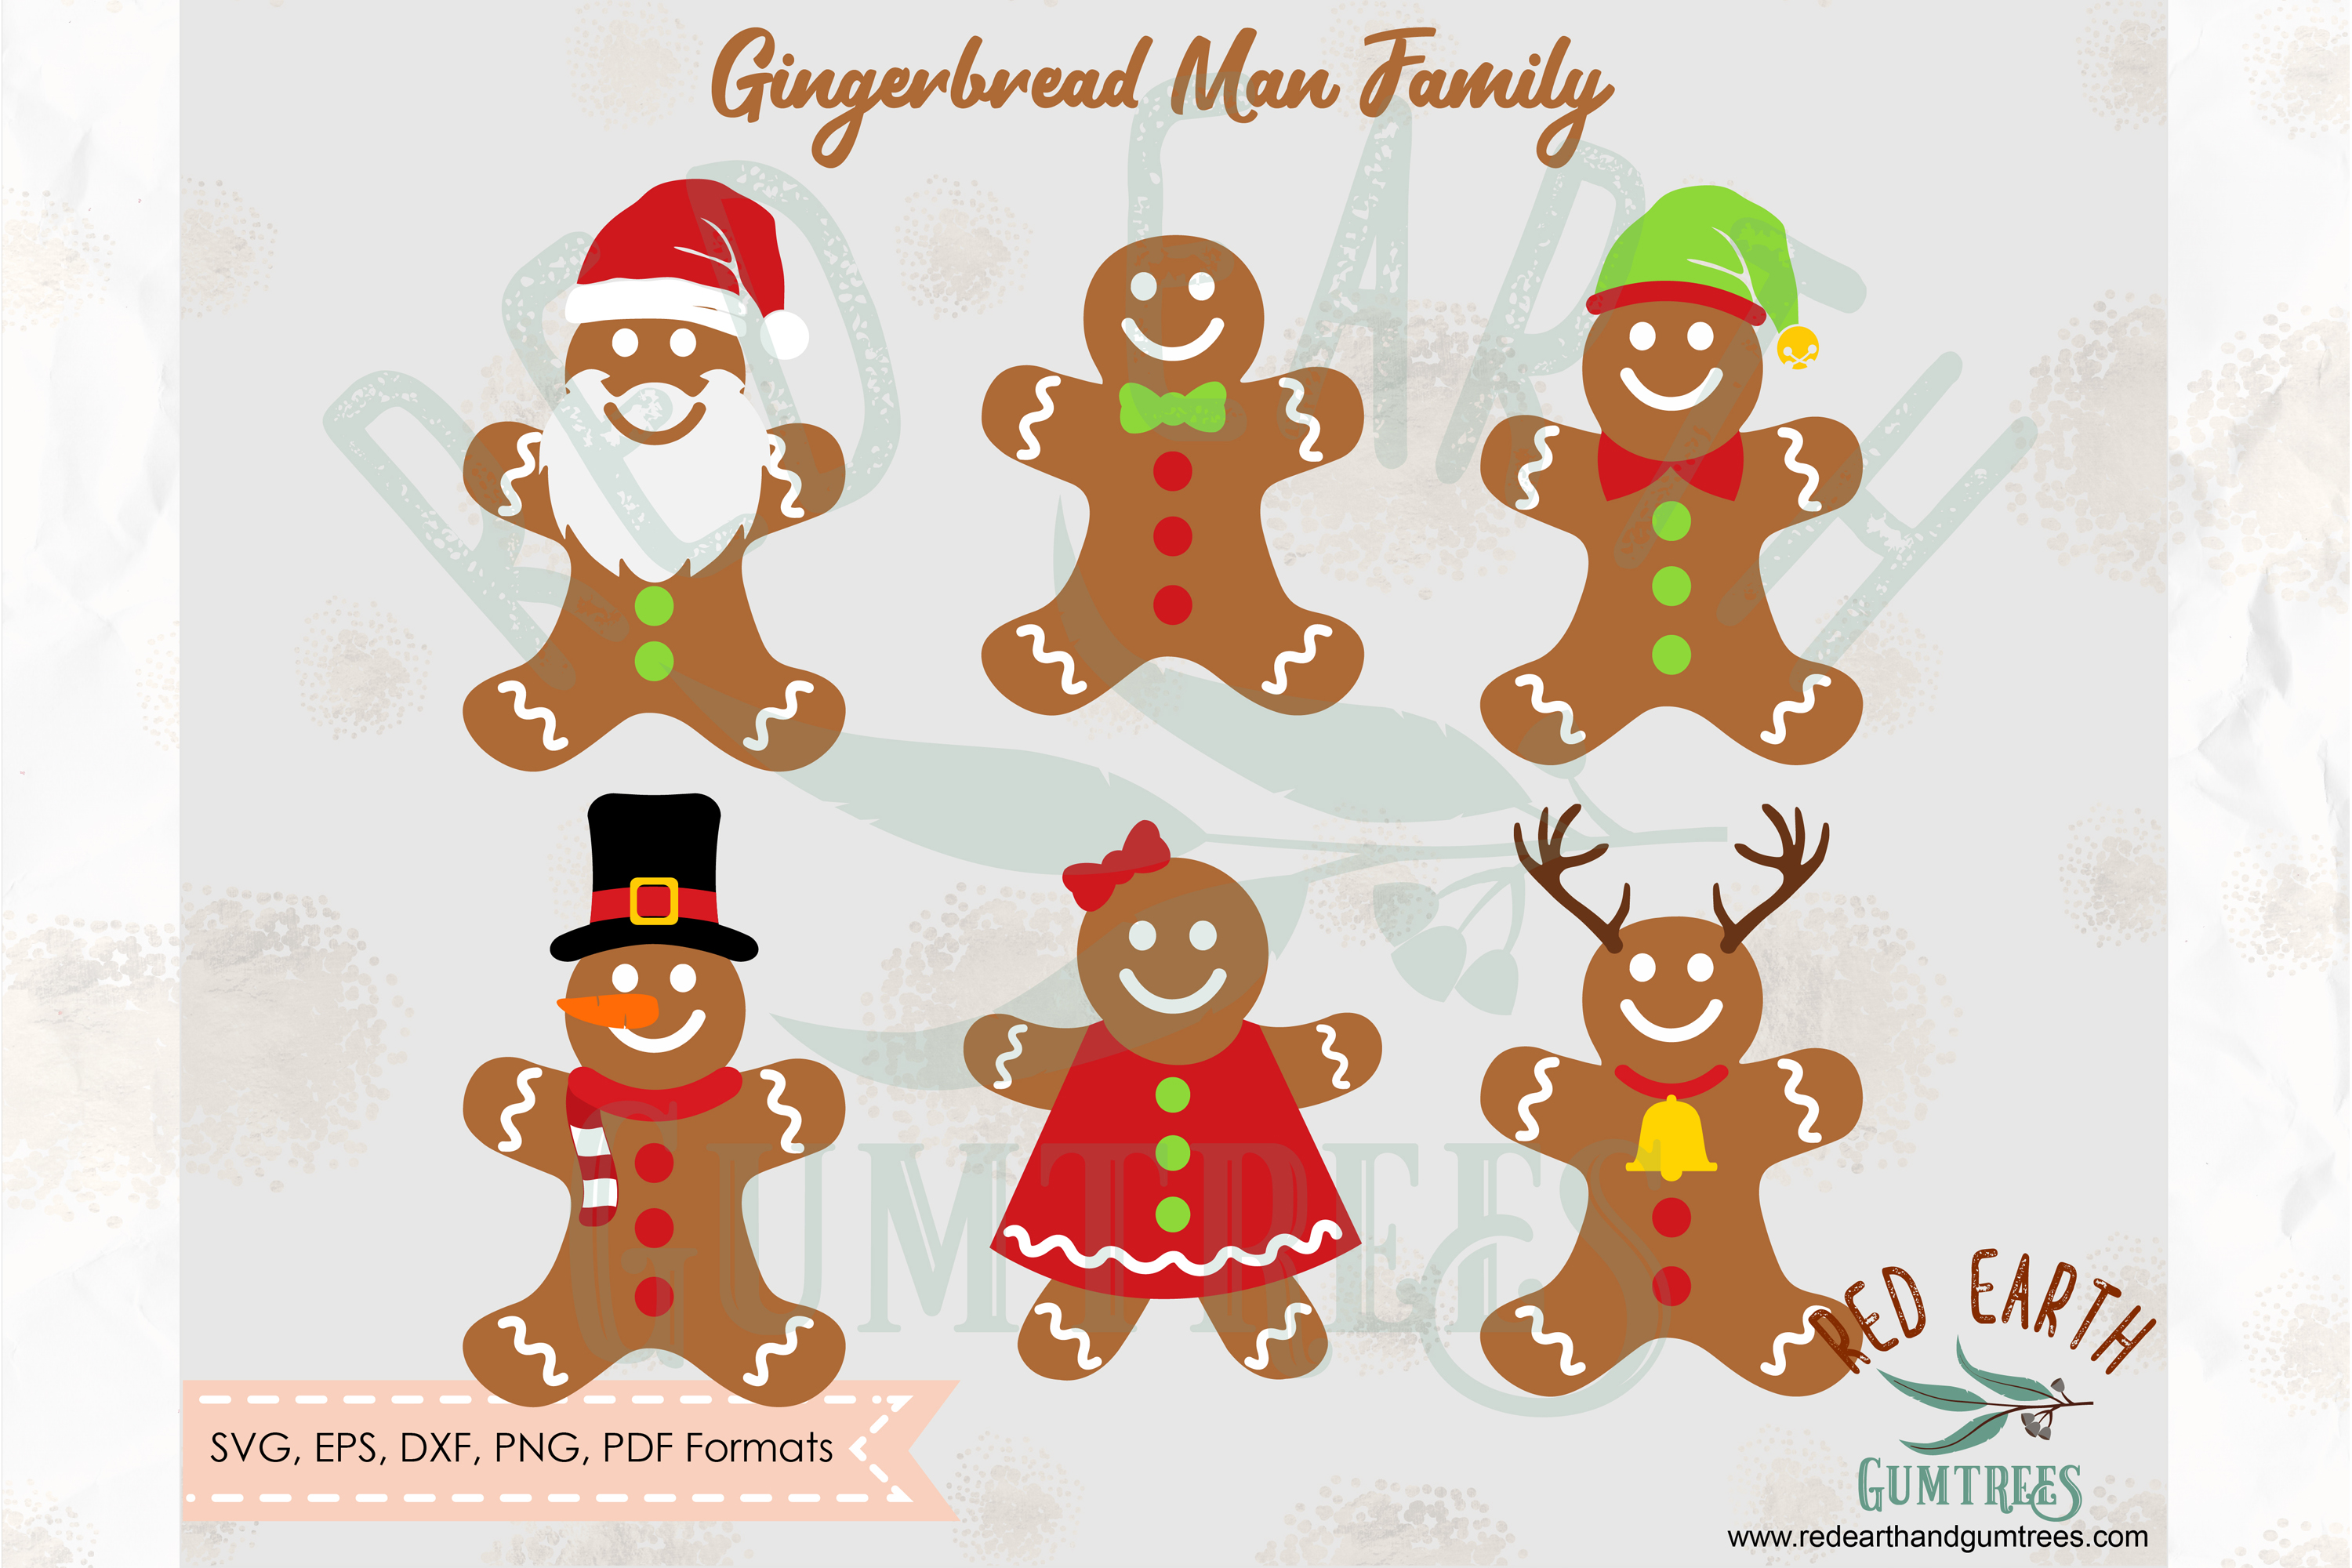 Gingerbread man Family bundle, Christmas SVG,DXF,PNG,EPS,PDF